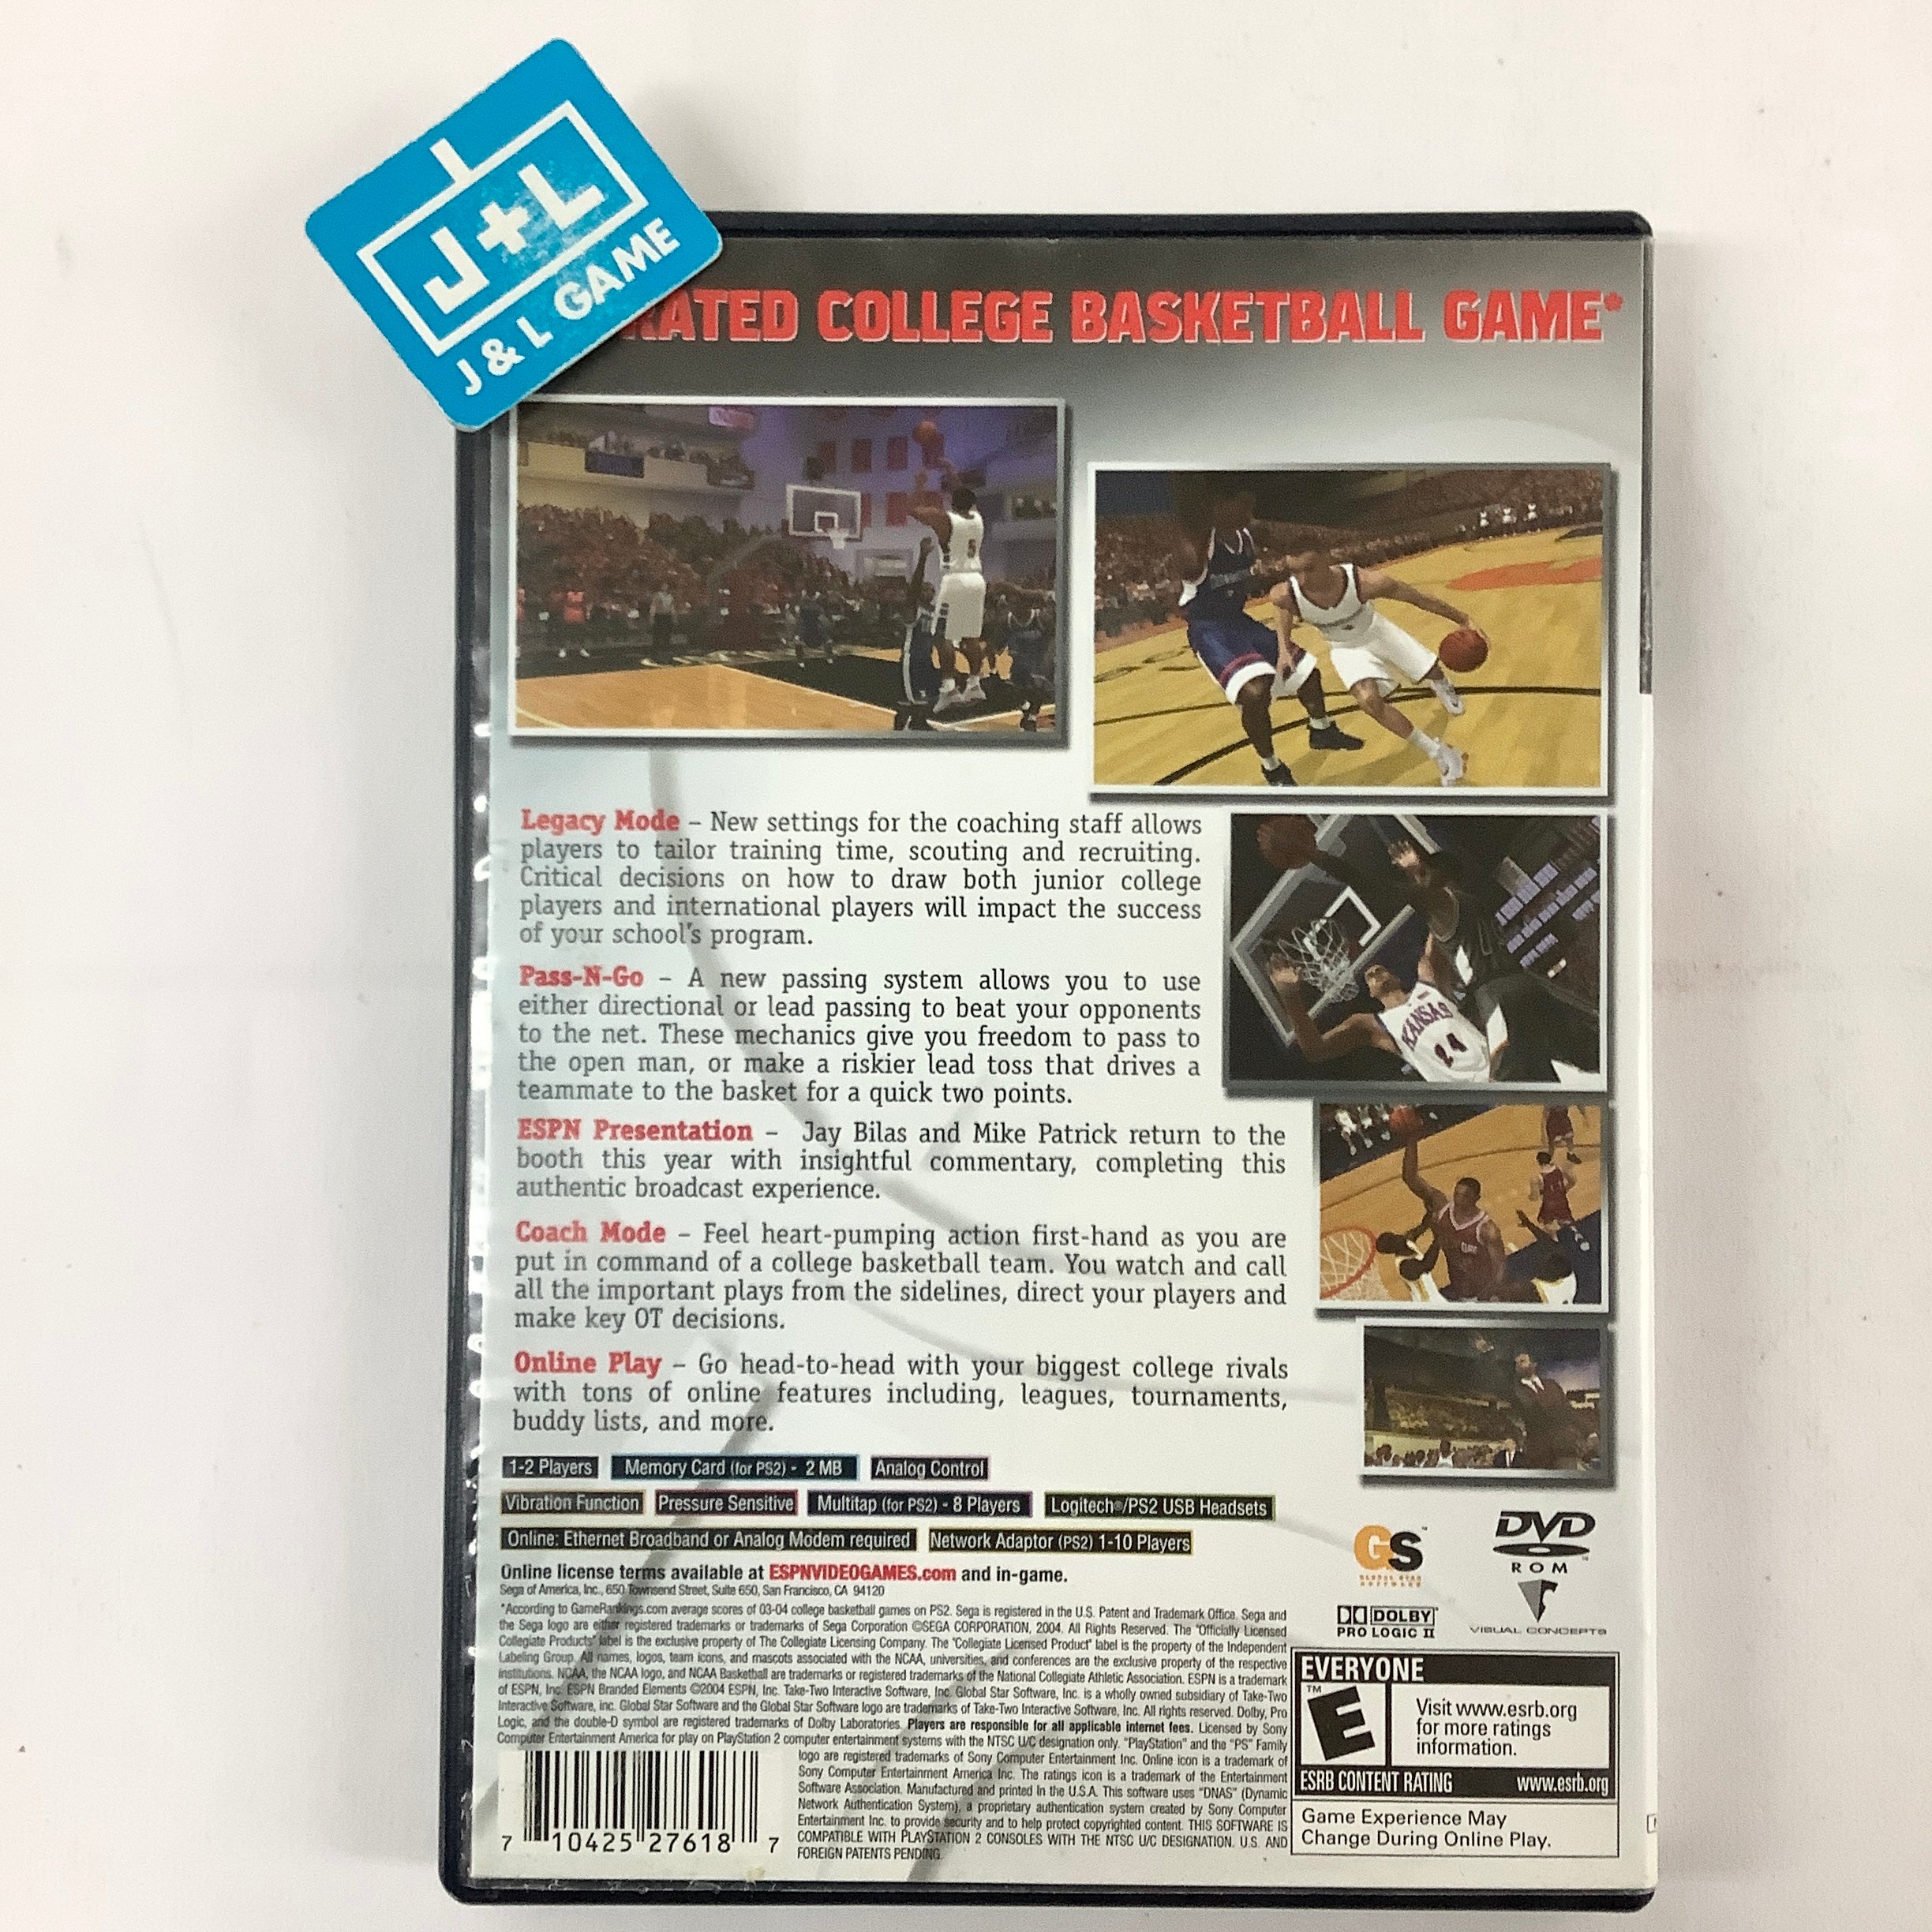 ESPN College Hoops 2K5 - (PS2) PlayStation 2 [Pre-Owned] Video Games Sega   